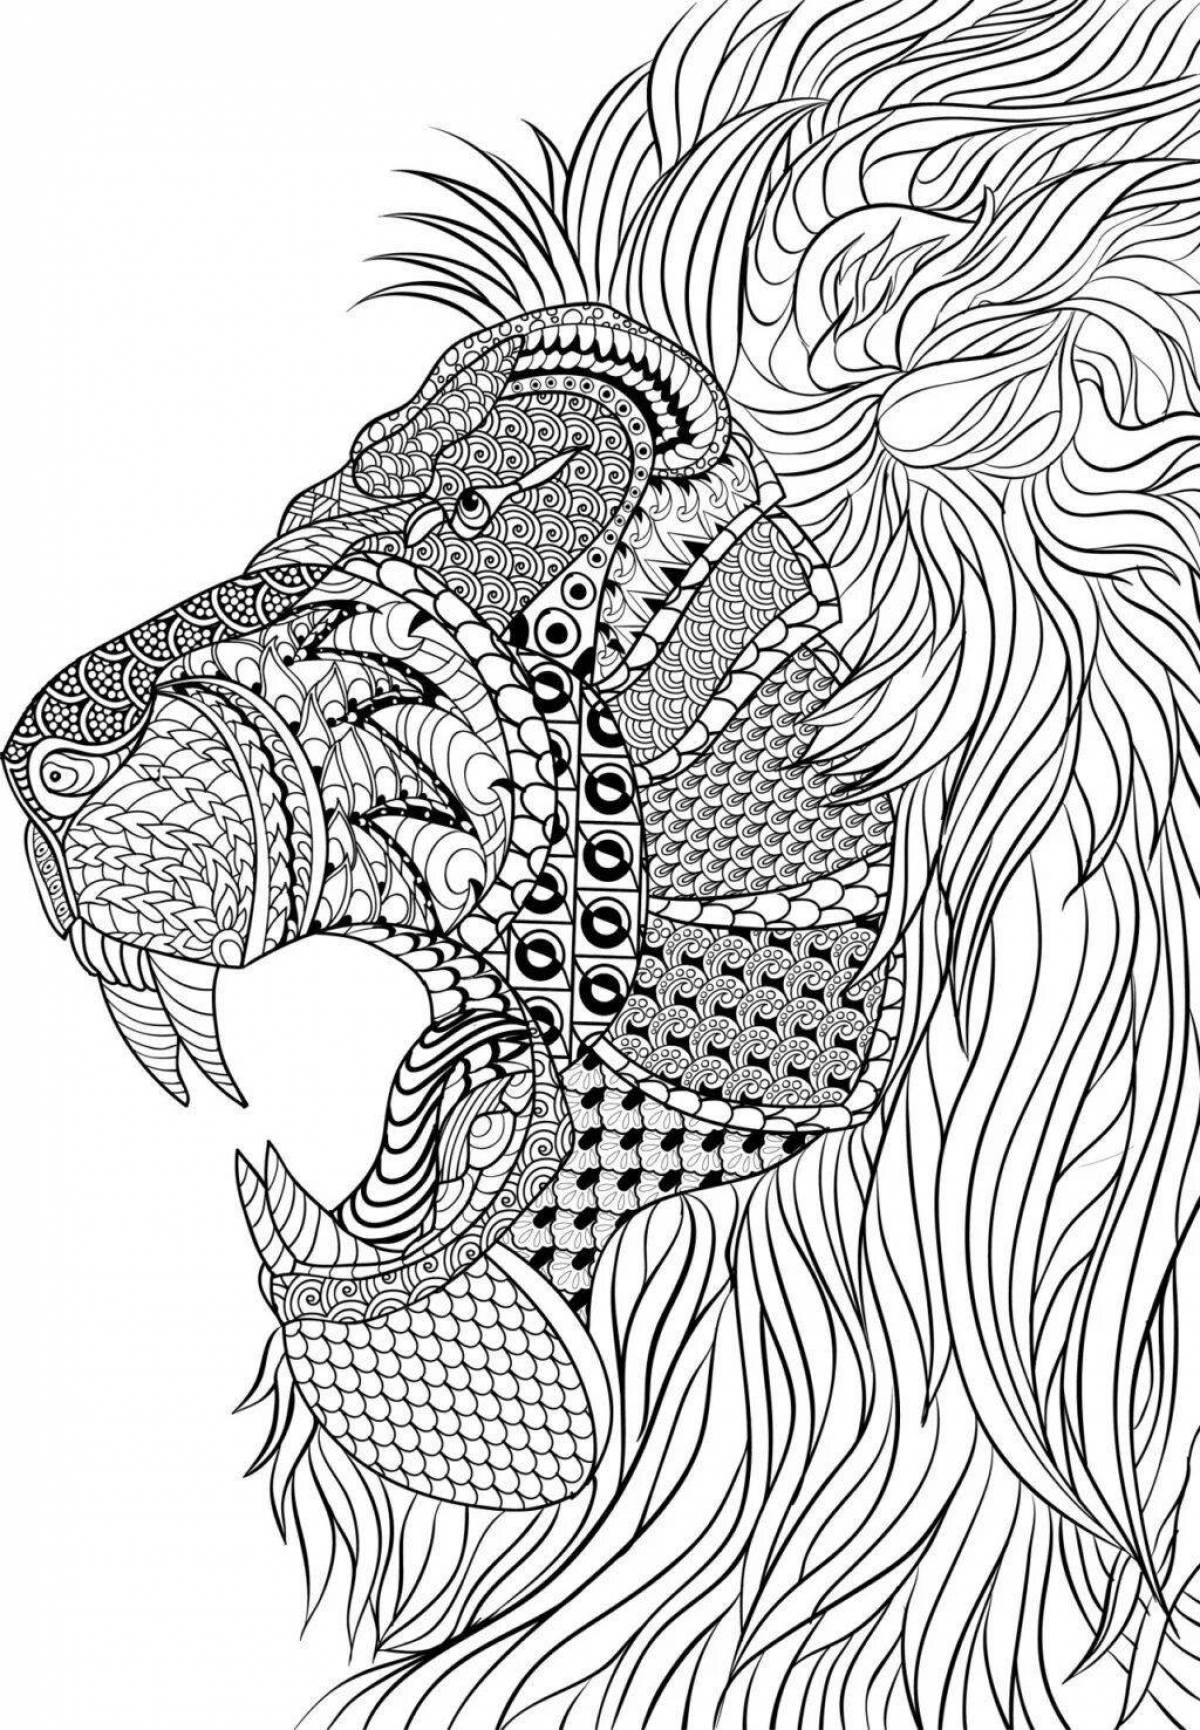 Dazzling coloring page lion complex